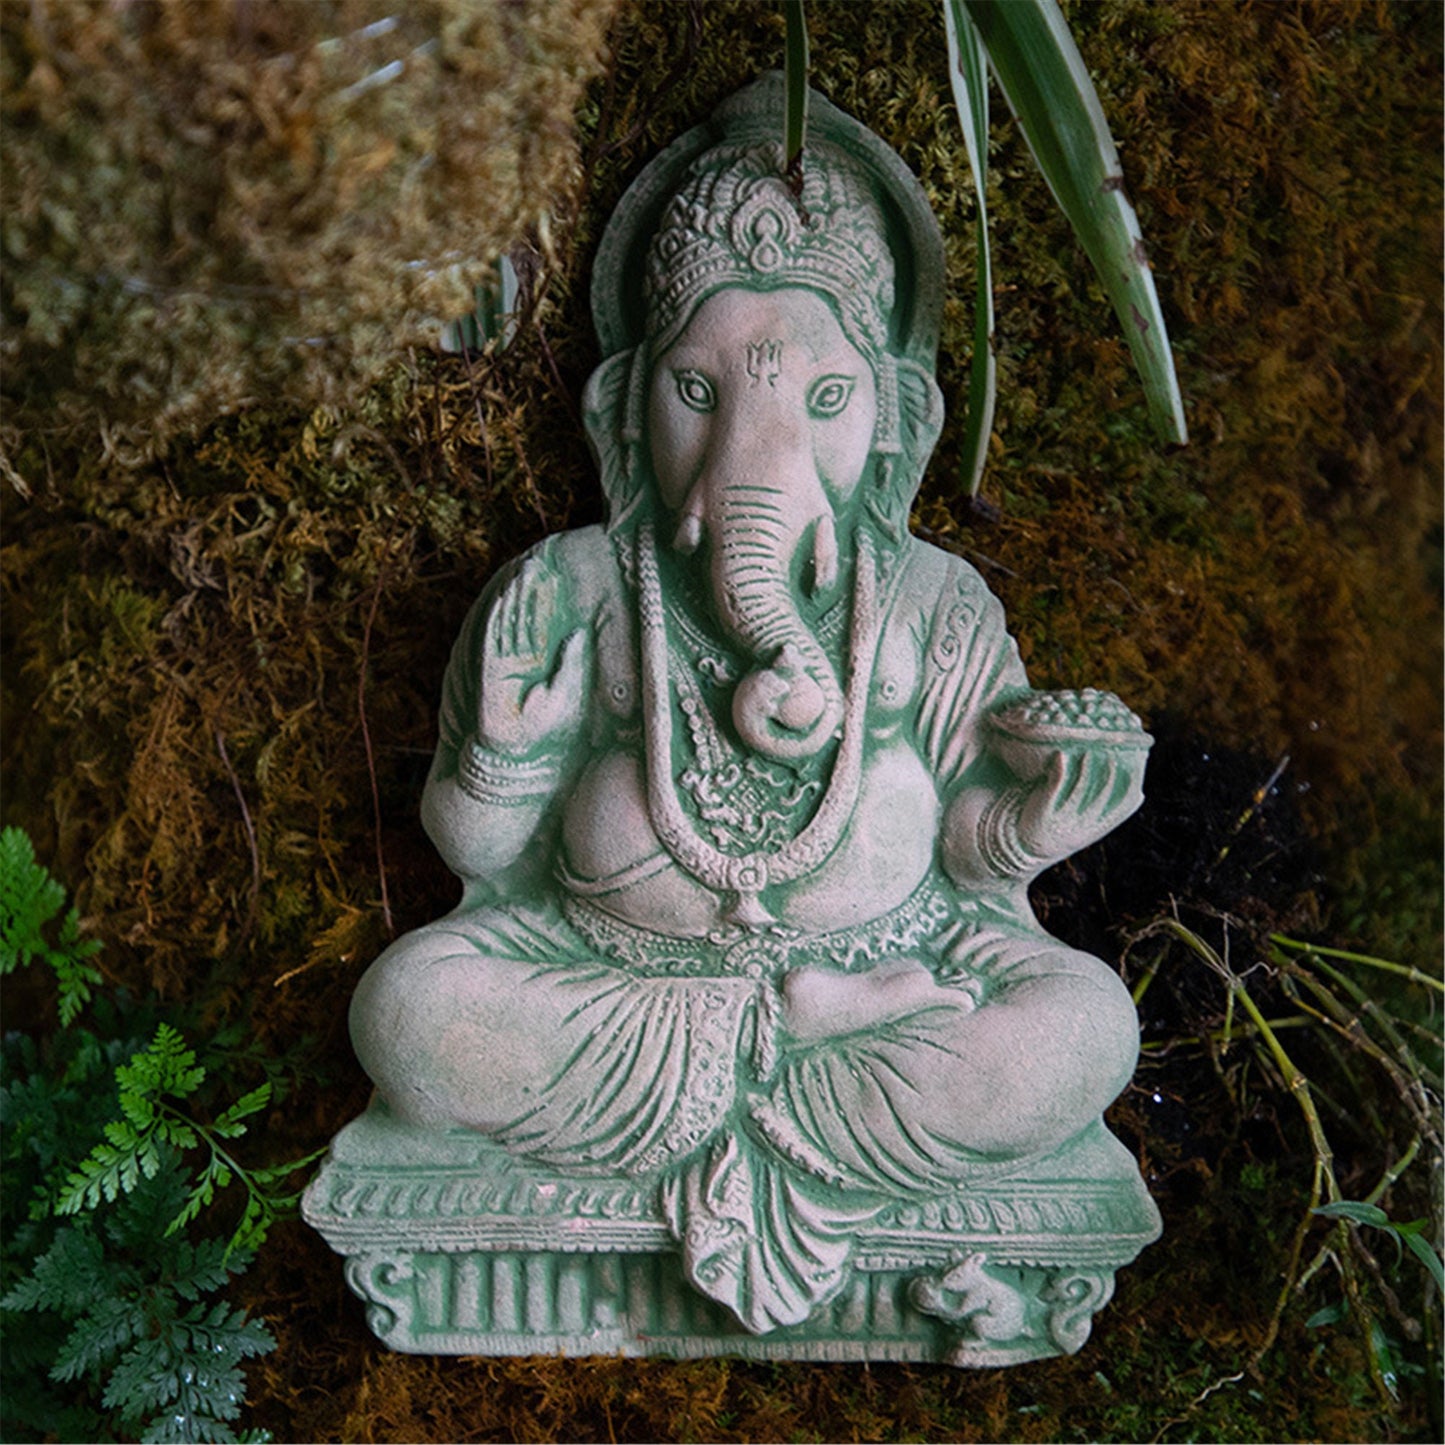 Gandhanra Handmade Thailand Style Ganesha Elephant God Buddha statuary,Stone Carving Ornaments For Meditation,Zen,Home & Garden Decor